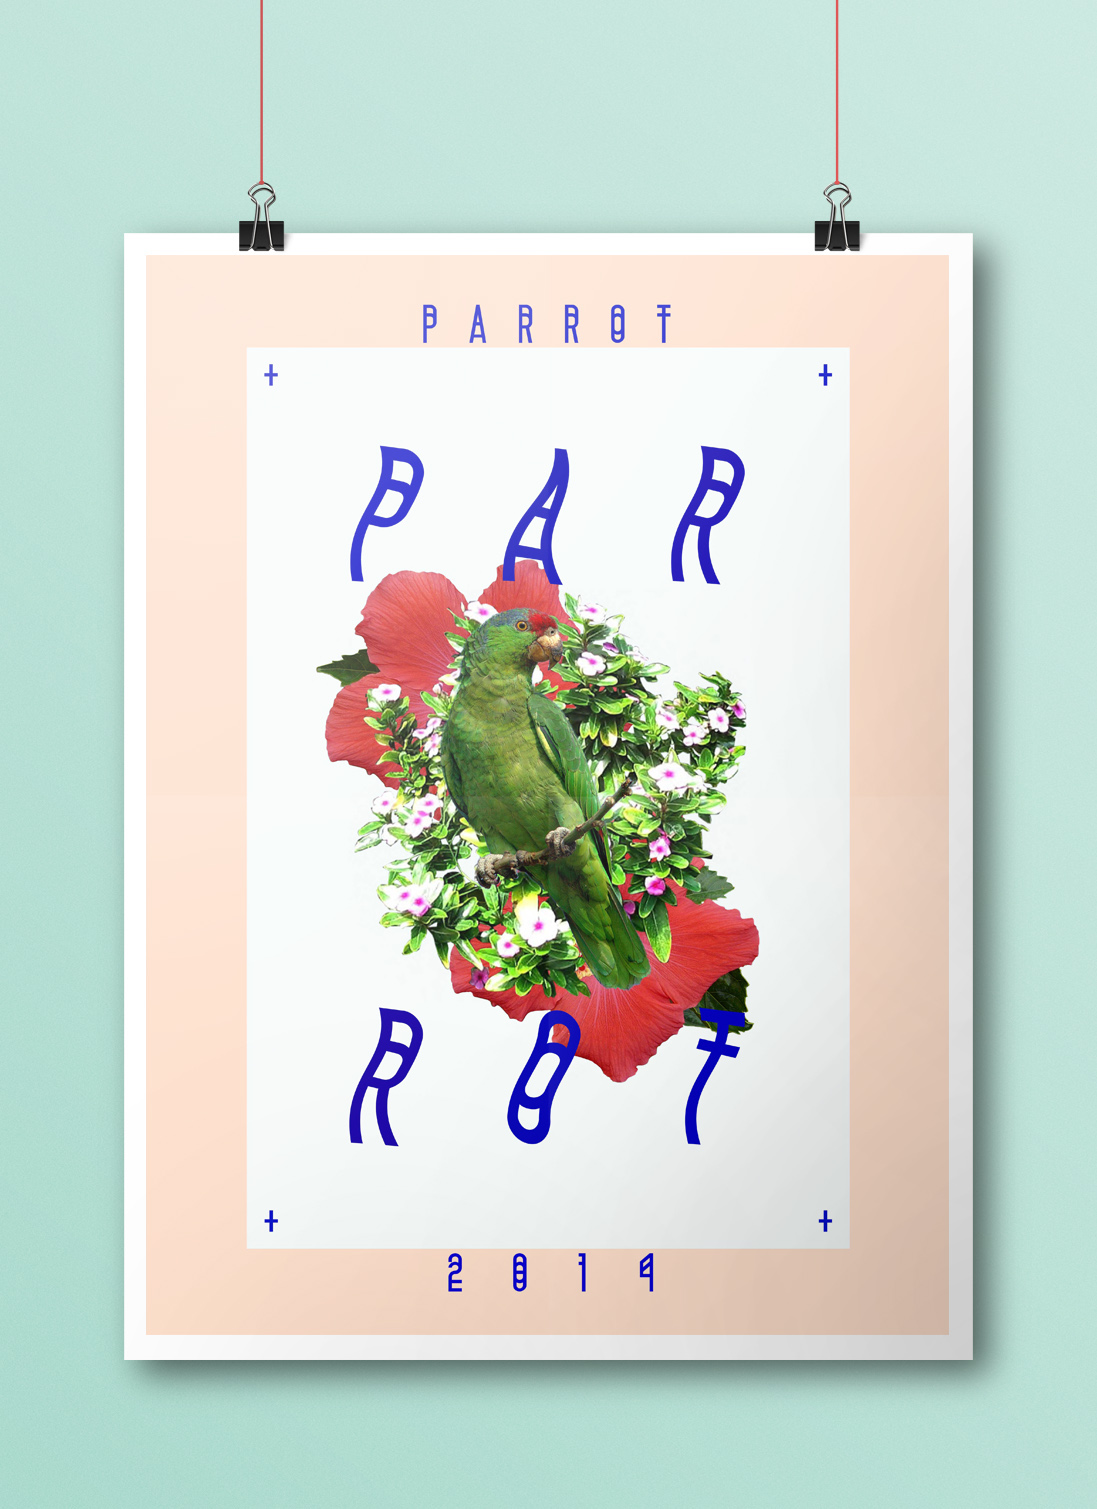 parrot collage poster esotic flower Collection vaporwave art animal